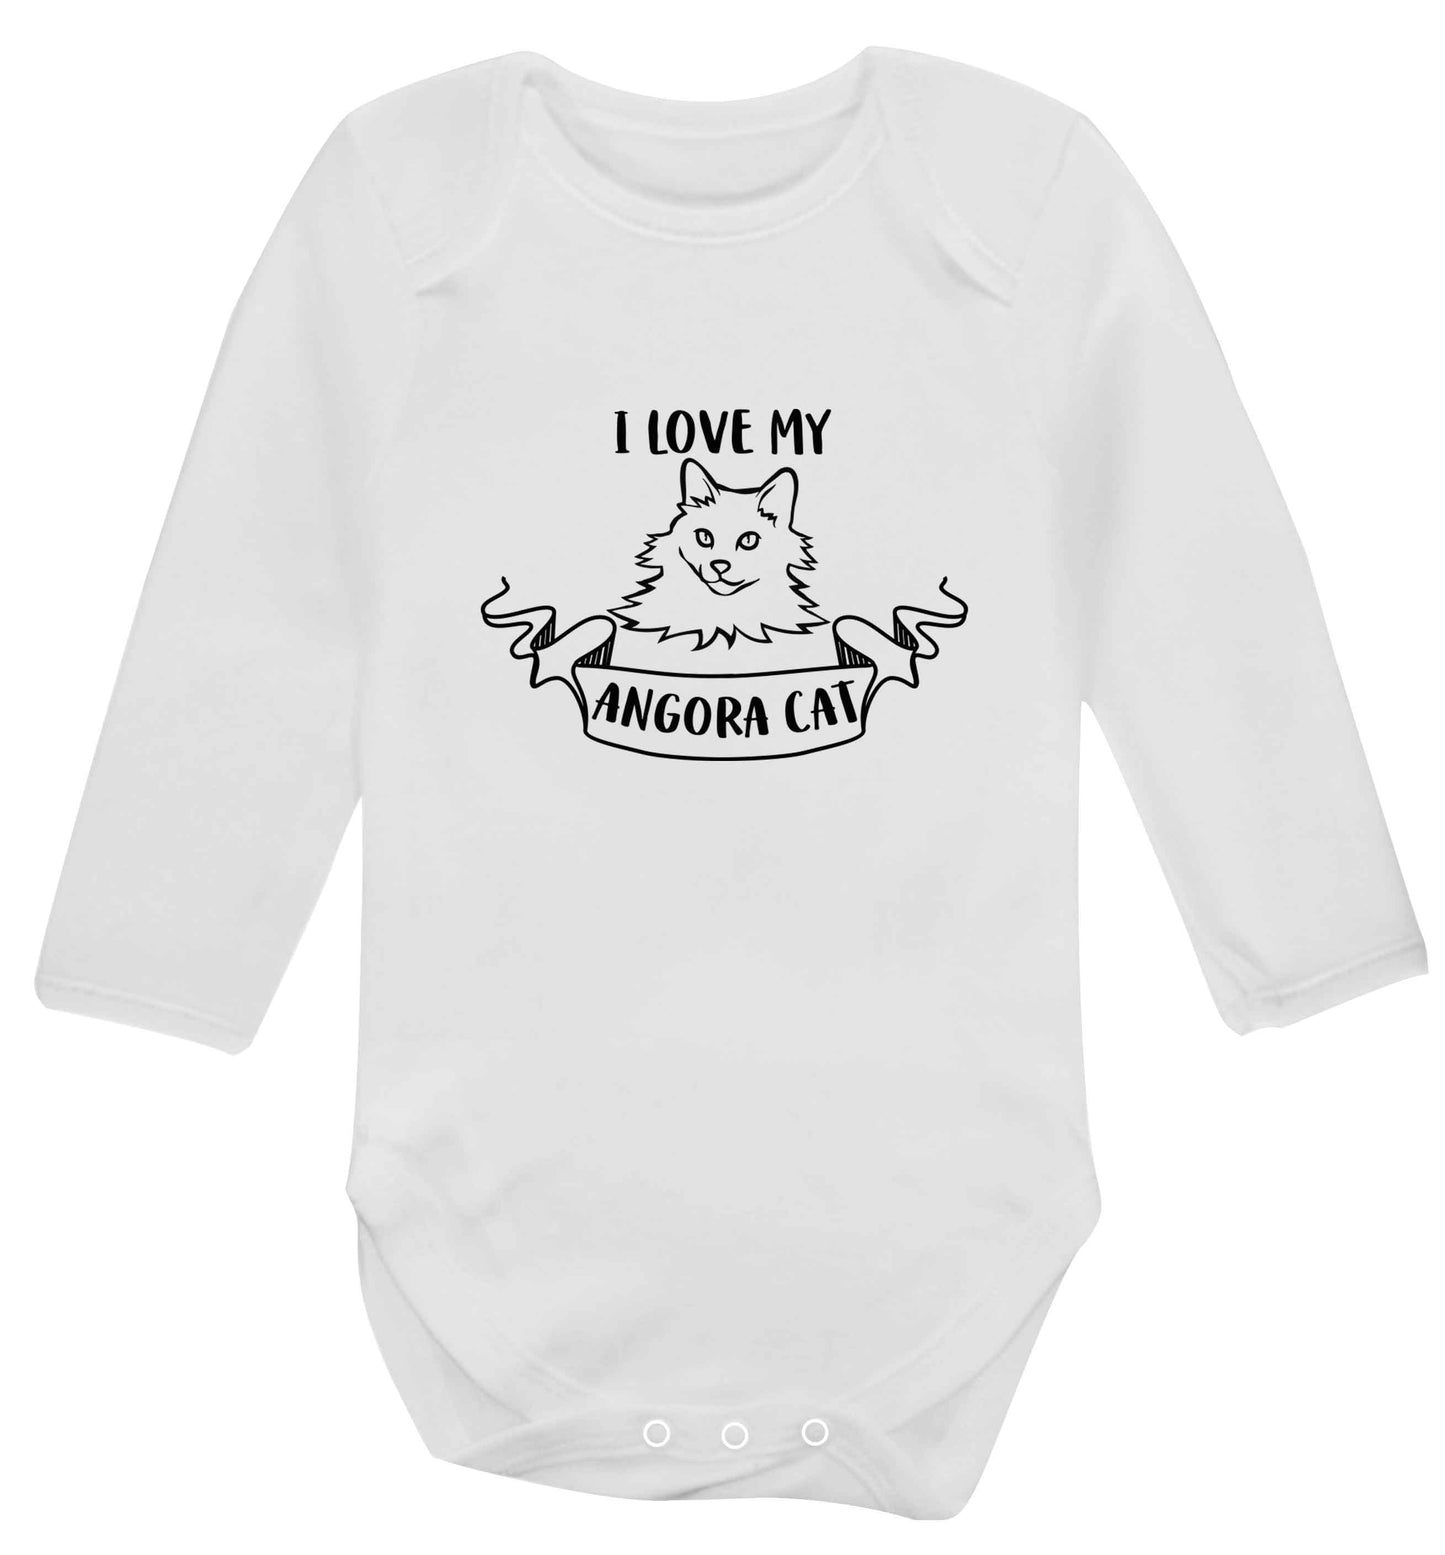 I love my angora cat baby vest long sleeved white 6-12 months